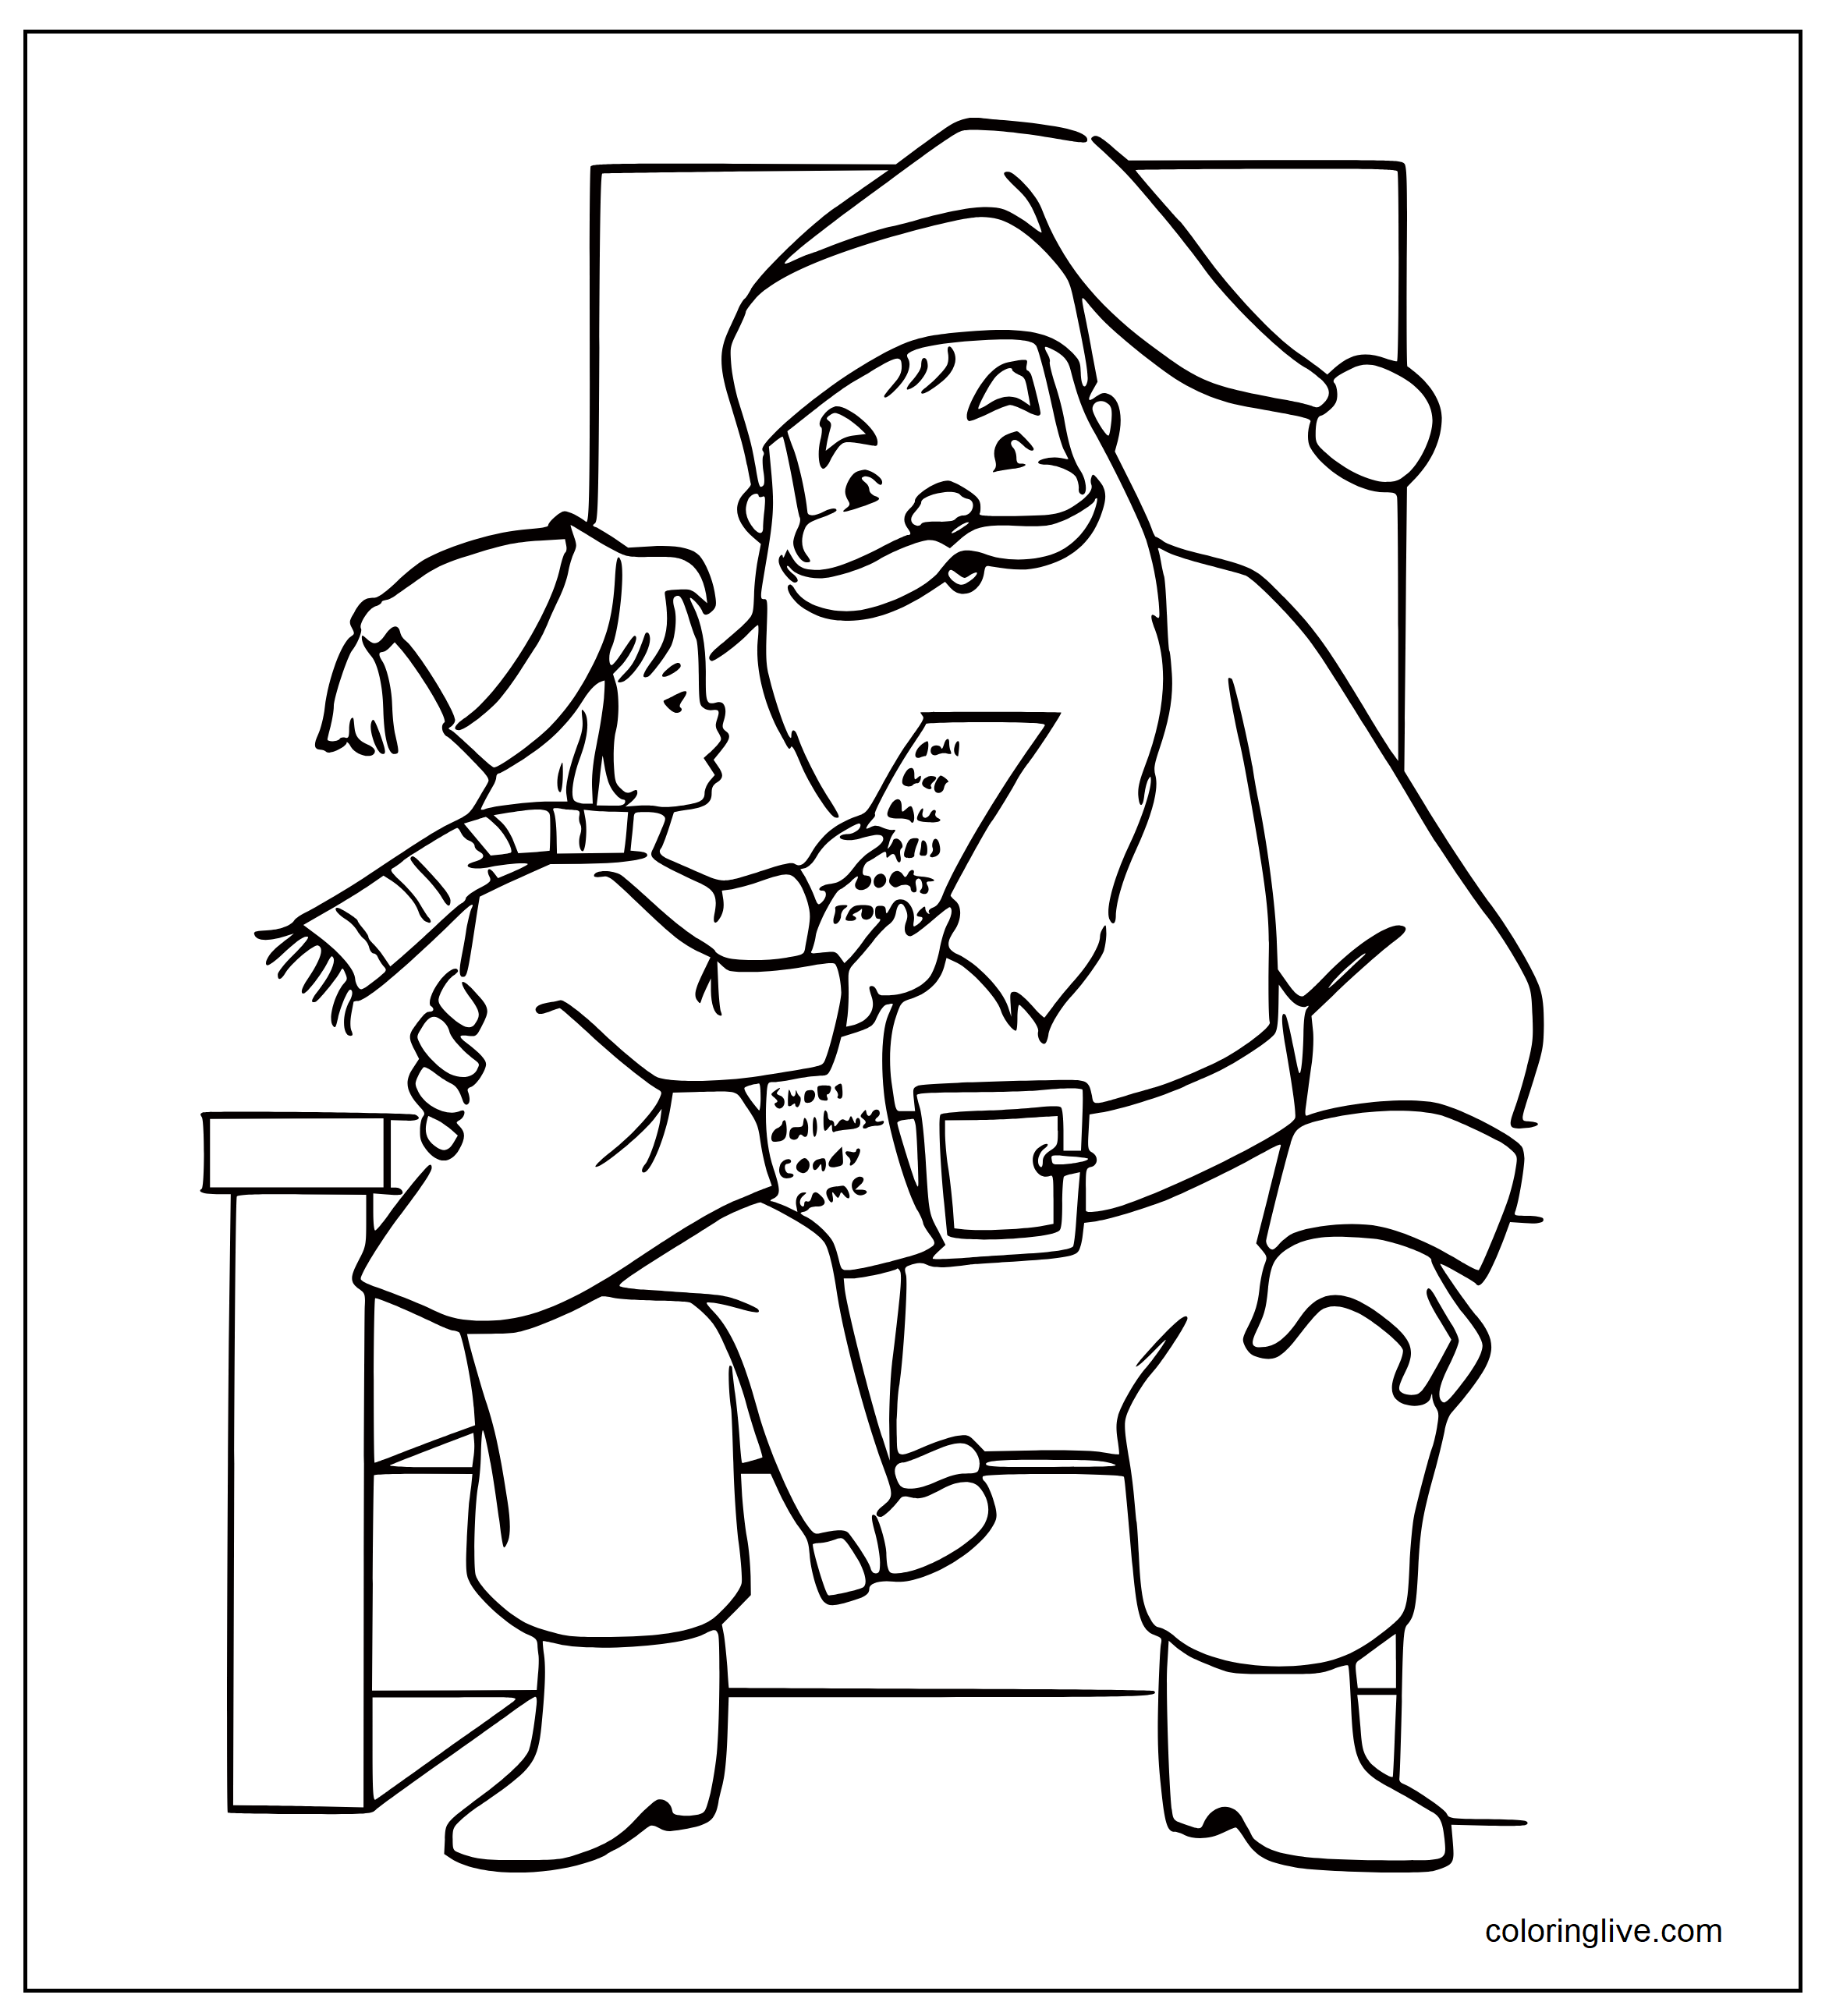 Printable Santa checking gift list Coloring Page for kids.